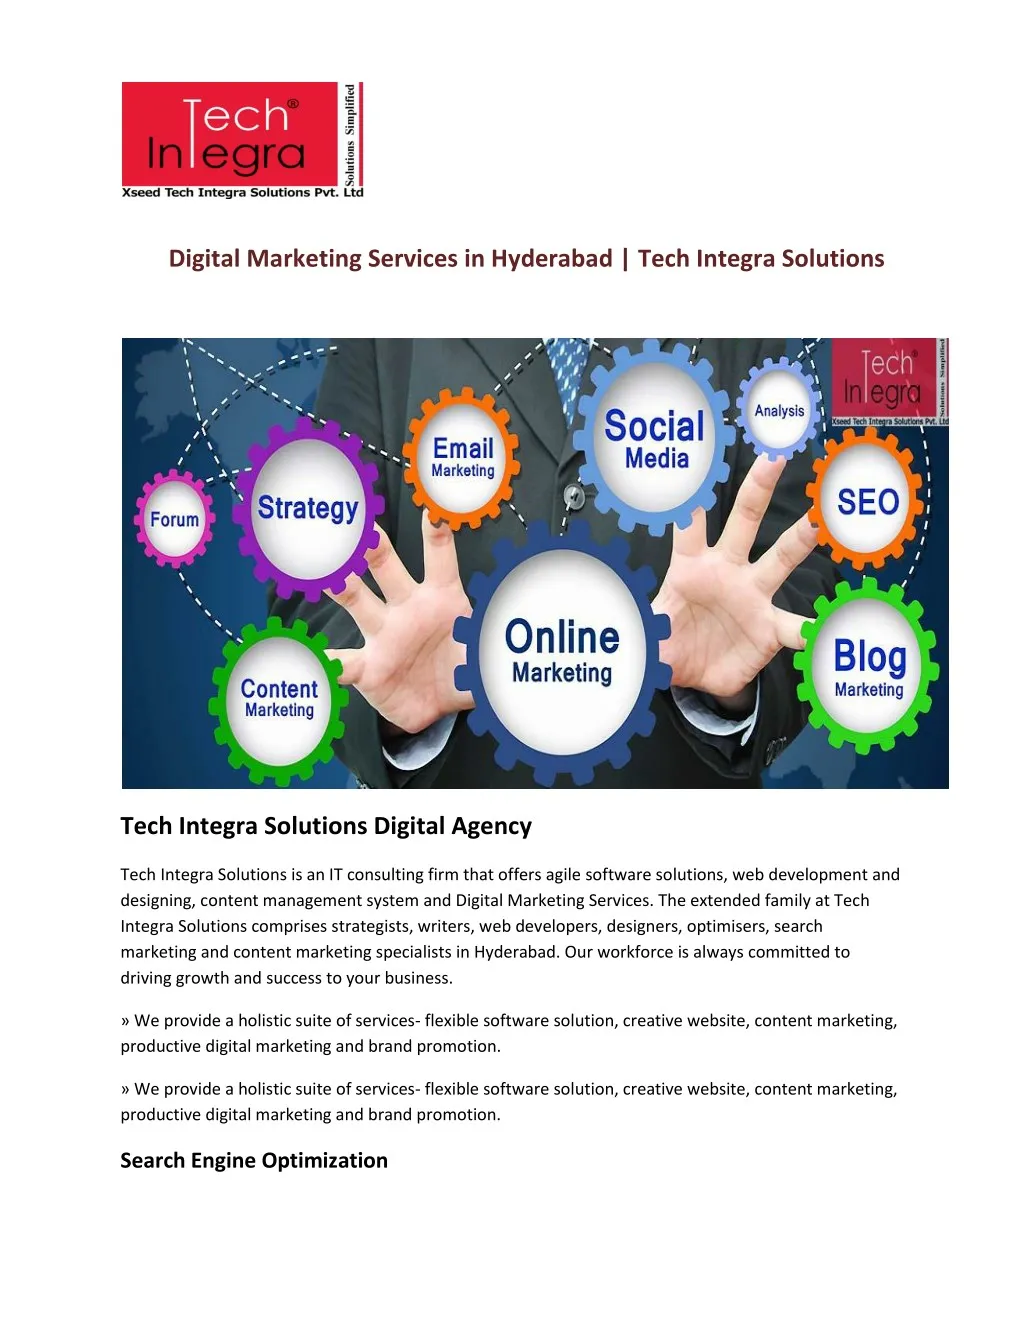 digital marketing services in hyderabad tech